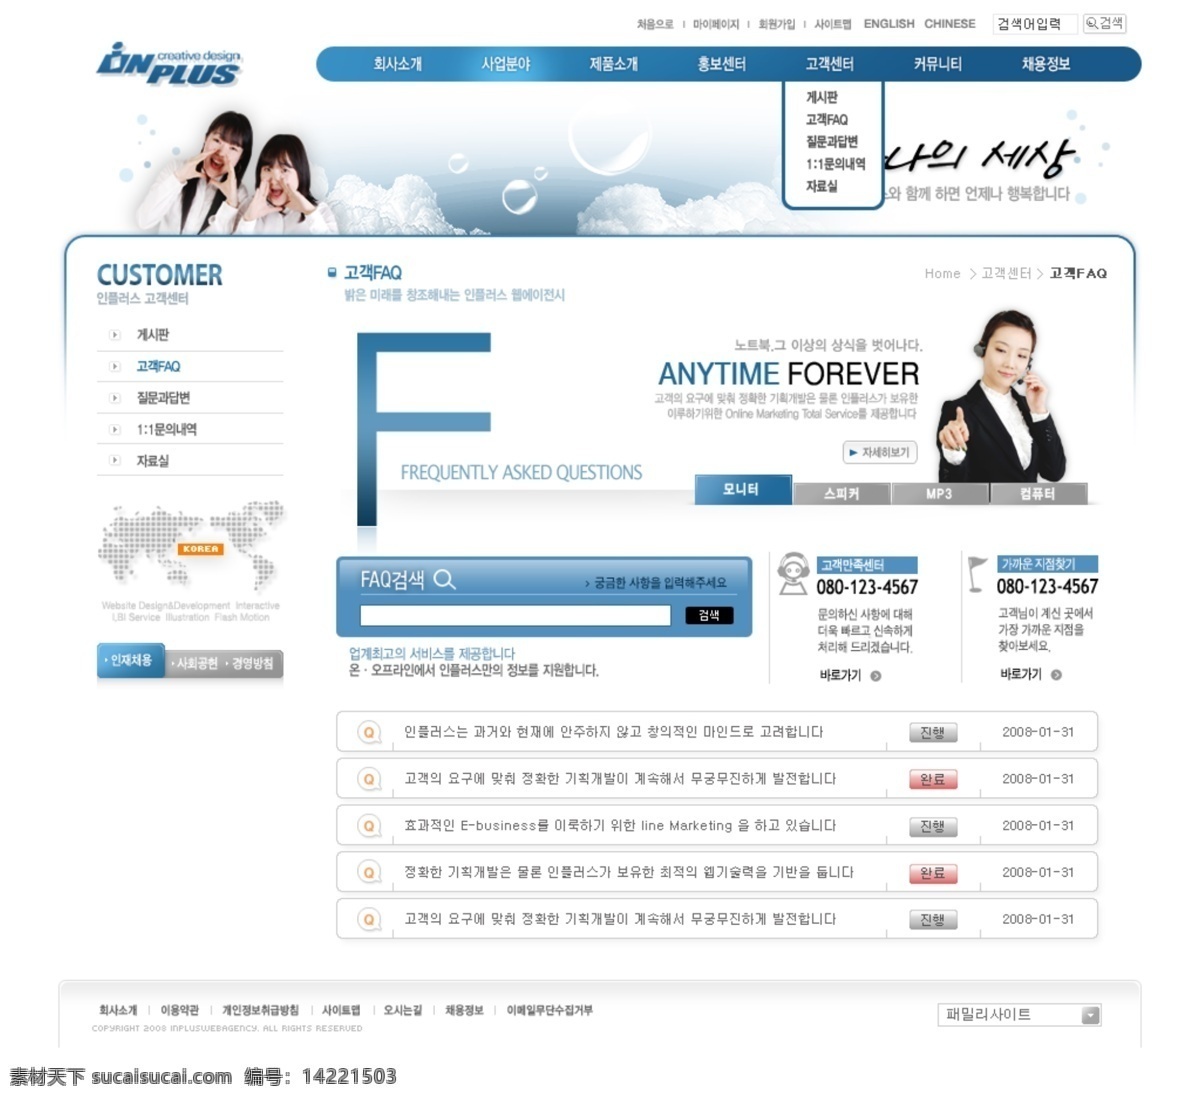 ps分层 大方 韩国模板 简洁 蓝色 模板 网页模板 网站 整站模板 配色 非常 精美 配色精美 源文件 网页素材